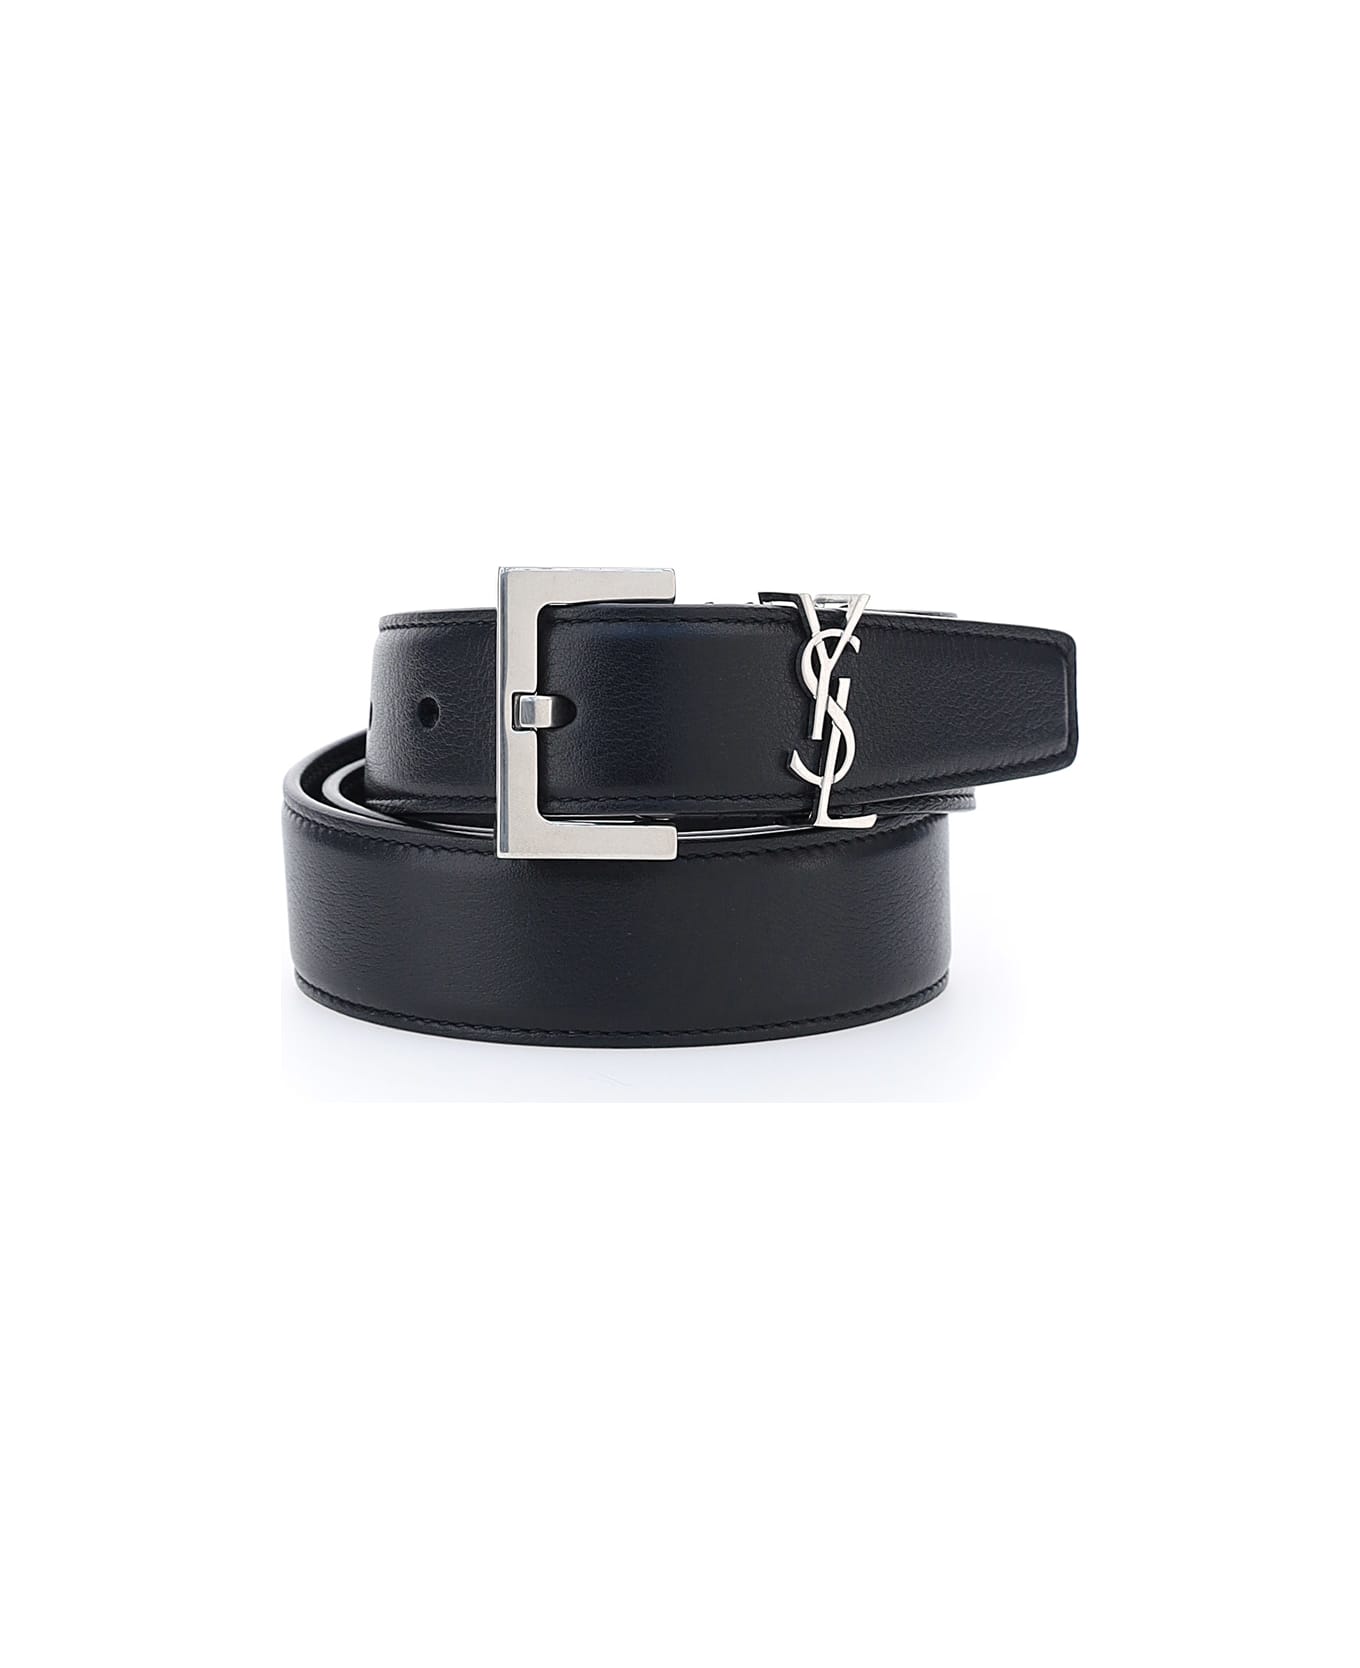 Saint Laurent Leather Belt With Silver Logo - Nero